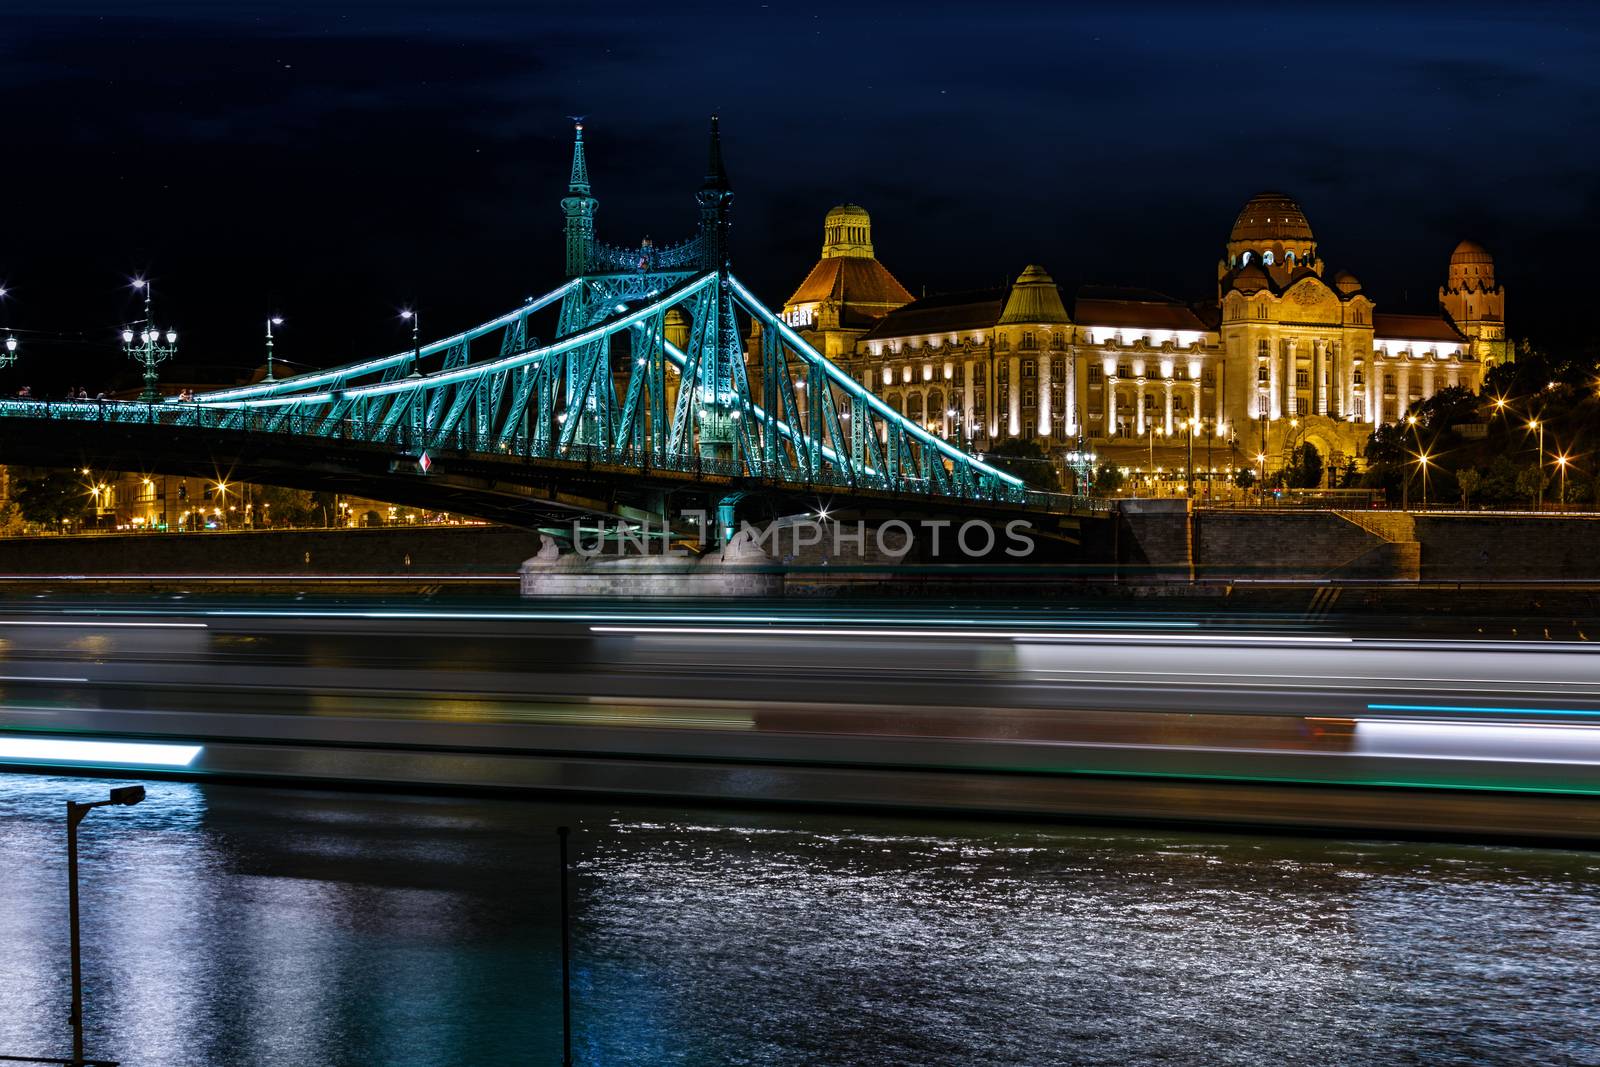 The night scene of the Budapest bridge and the Danube river